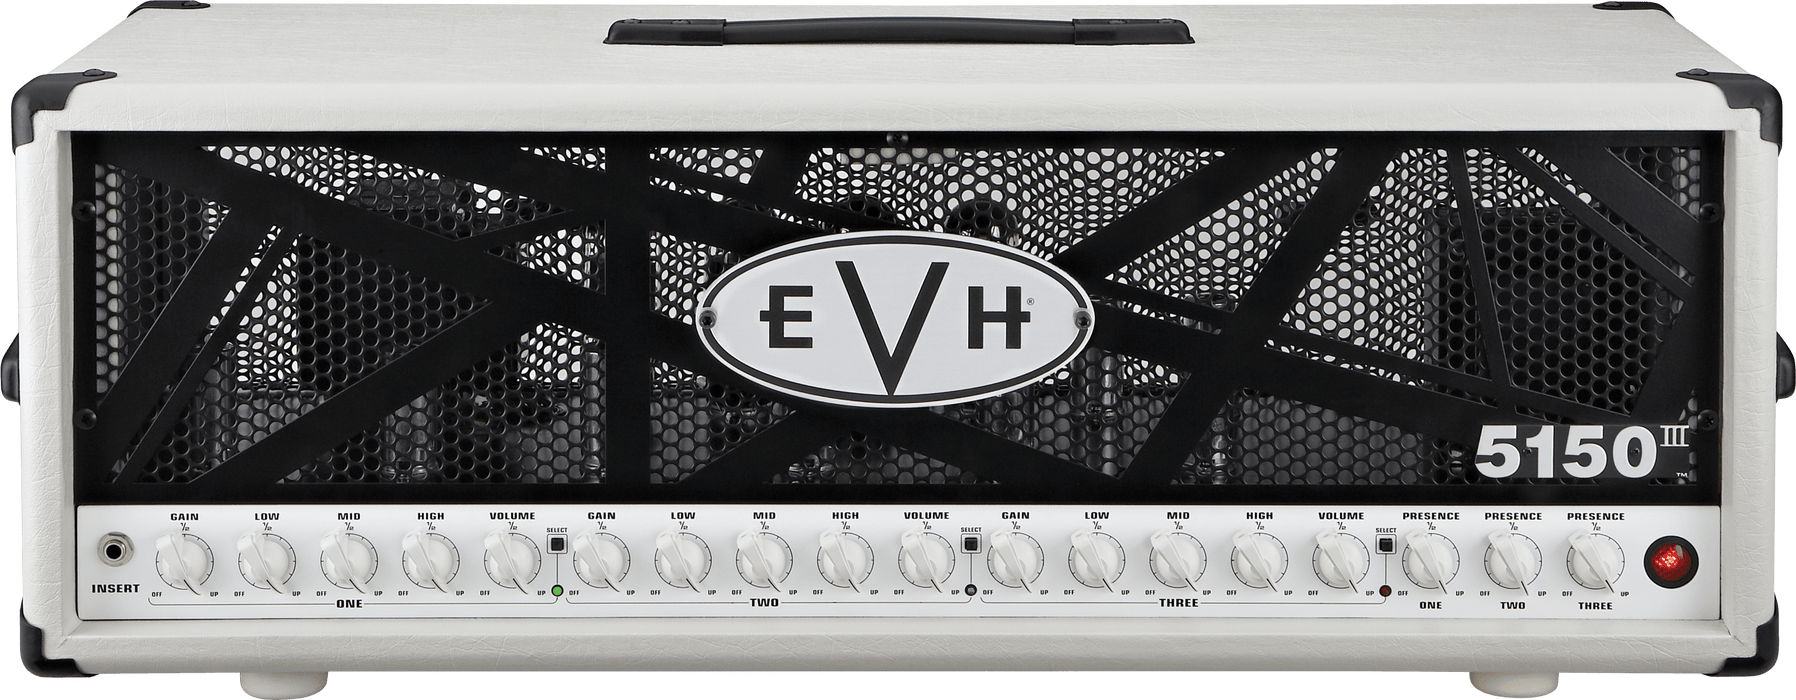 EVH 5150III® 100W Head, Ivory